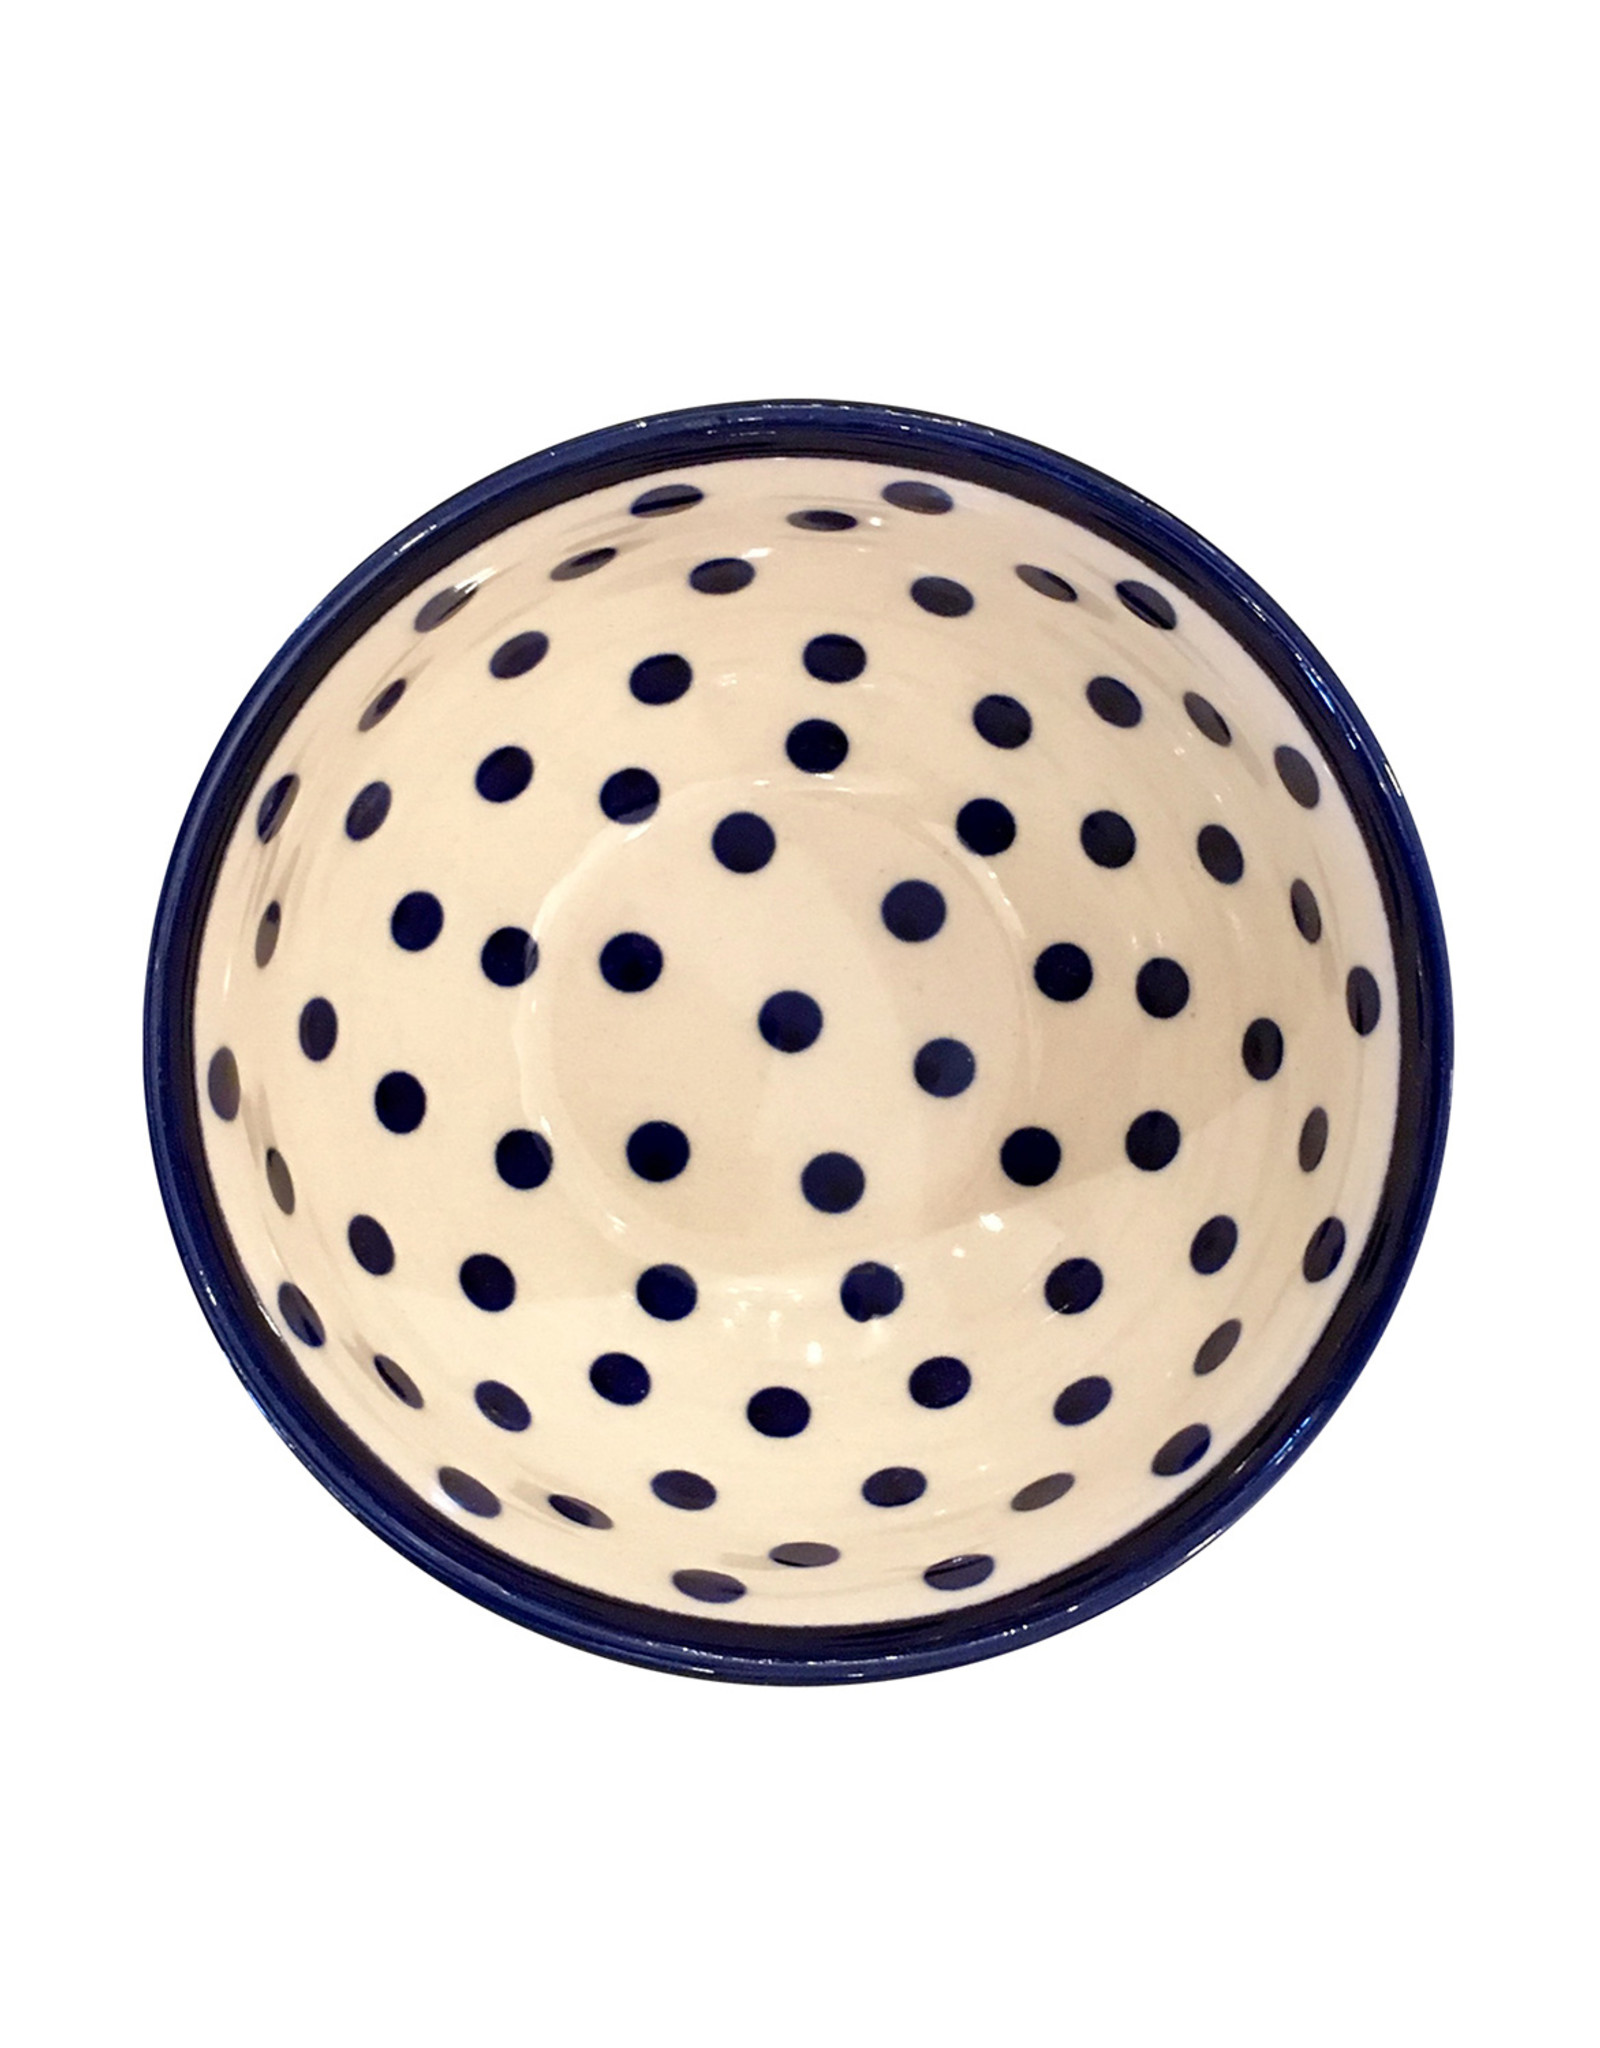 Cereal/Soup Bowl II- white/blue dots blue rim